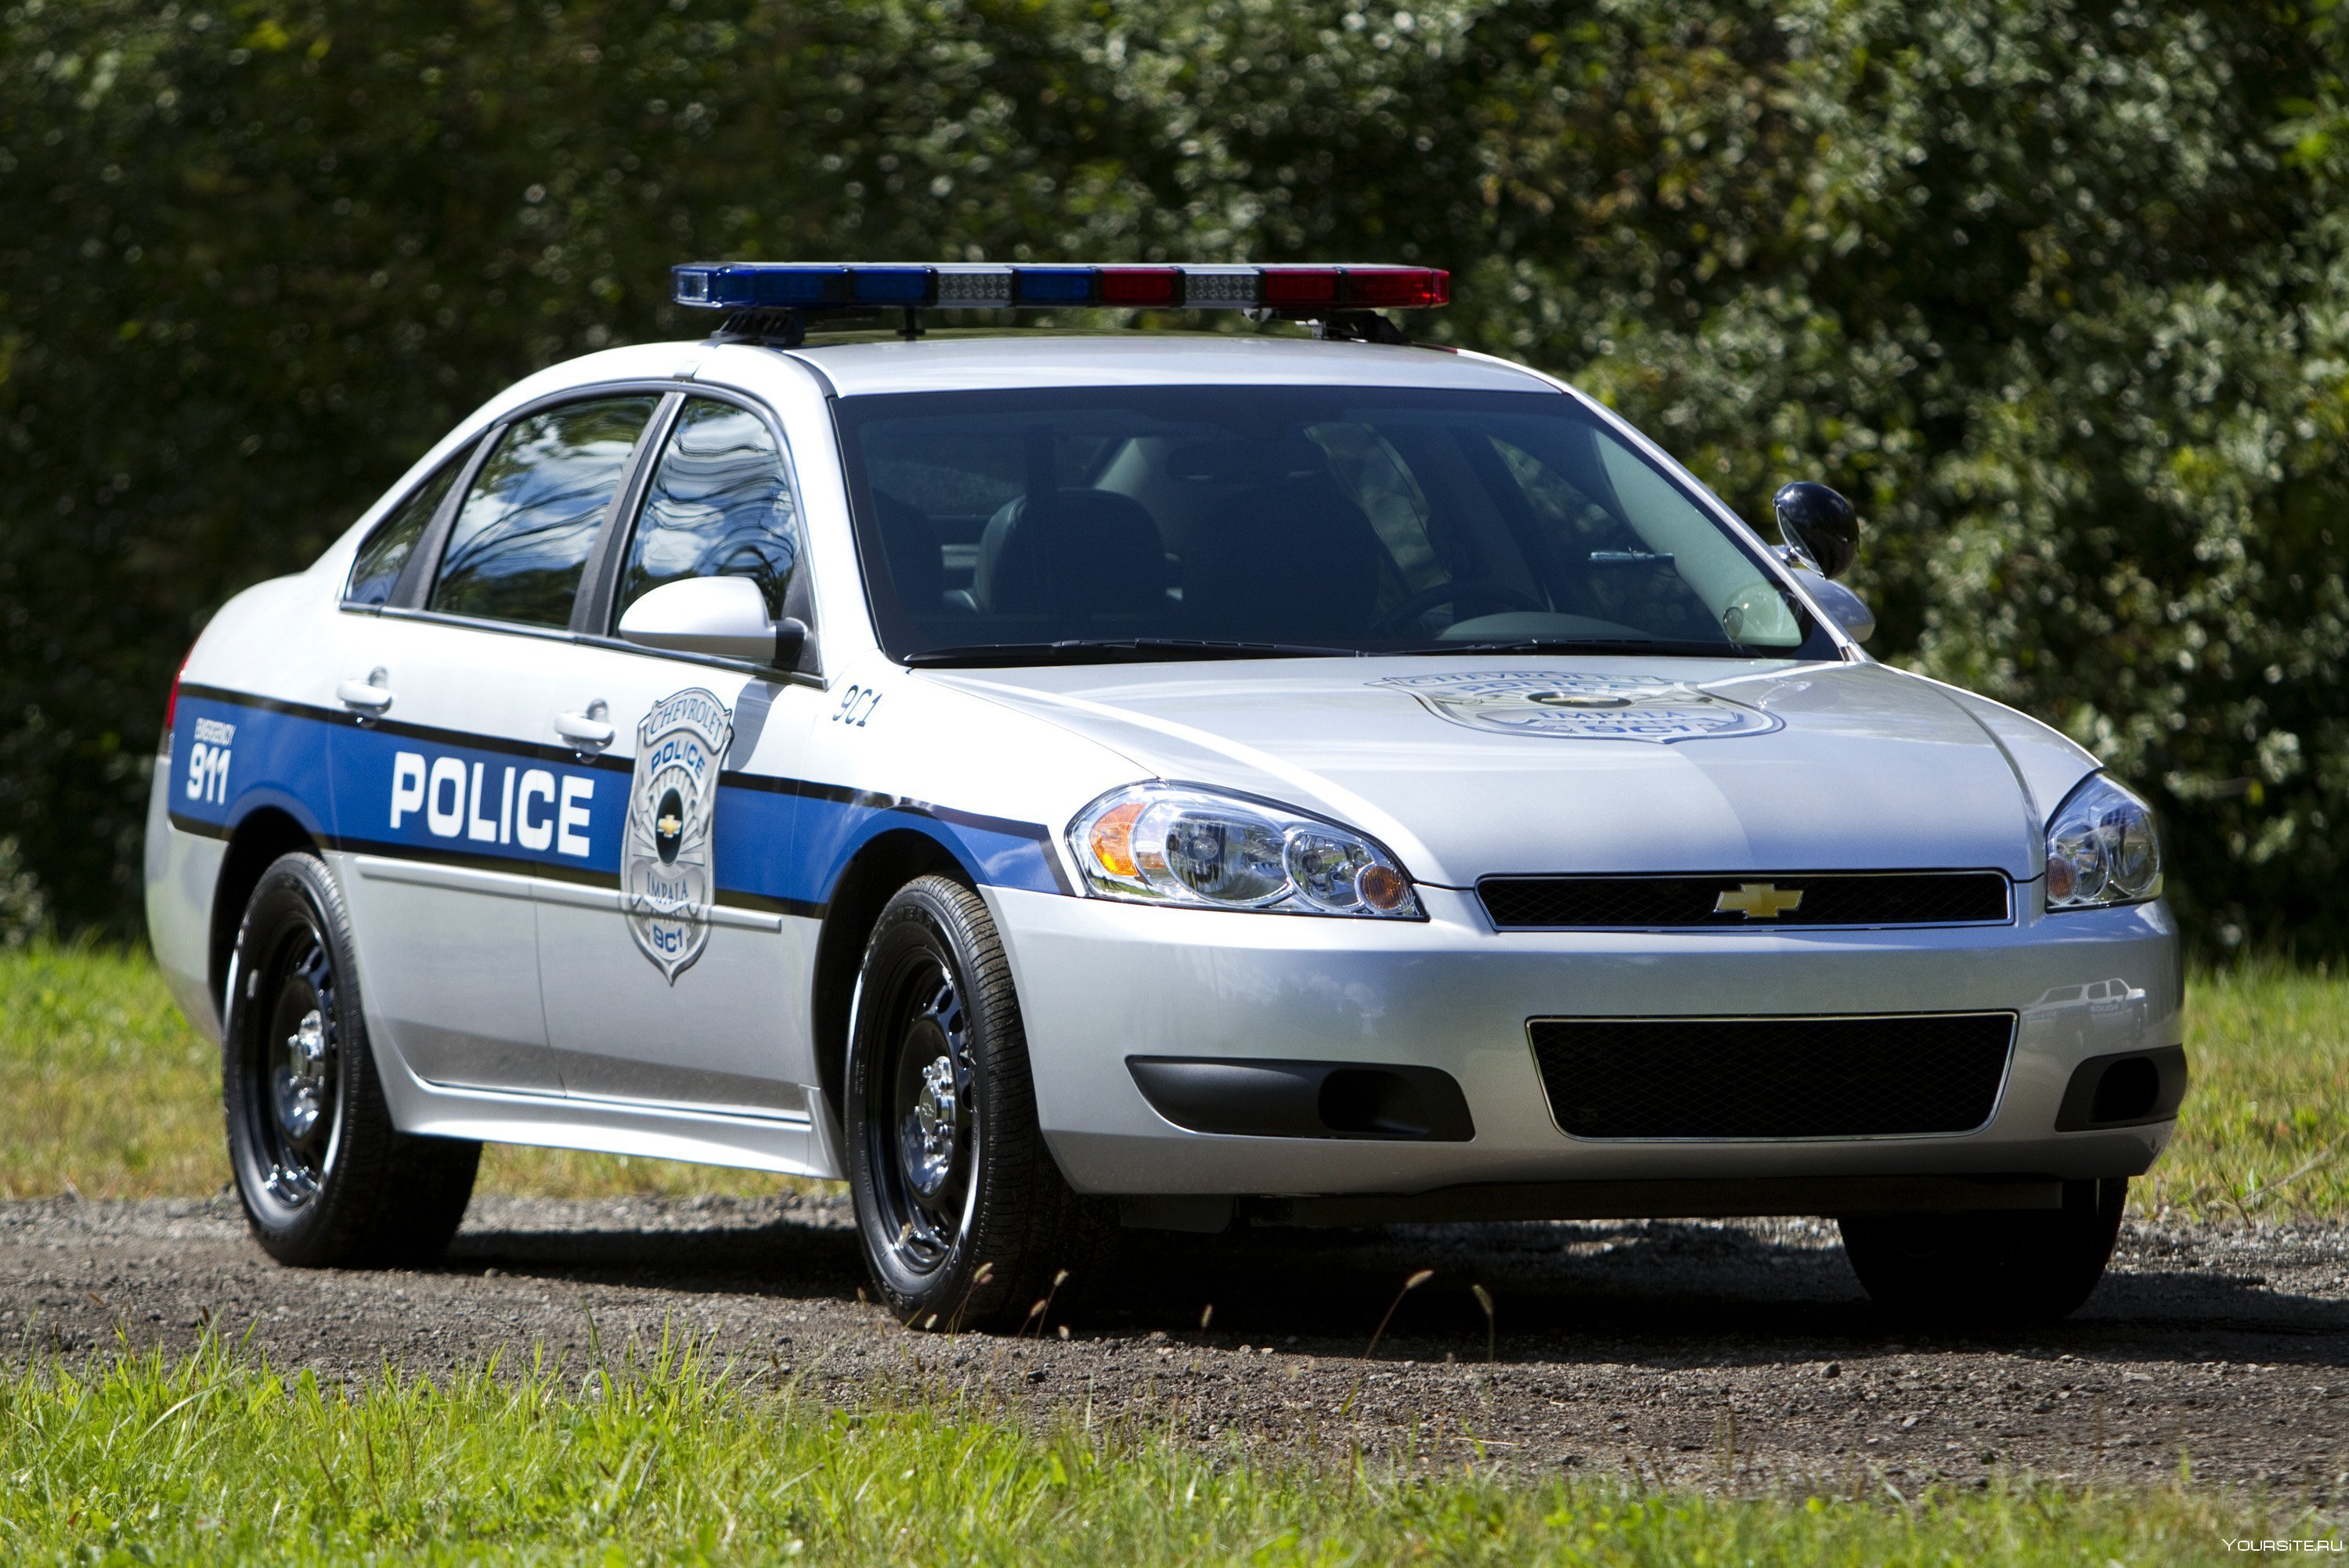 Chevrolet Impala 2000 Police. 2010 Chevrolet Impala Police. Chevrolet Impala 2000 полиция. Chevrolet Caprice 2015 Police. Марки полицейских машин